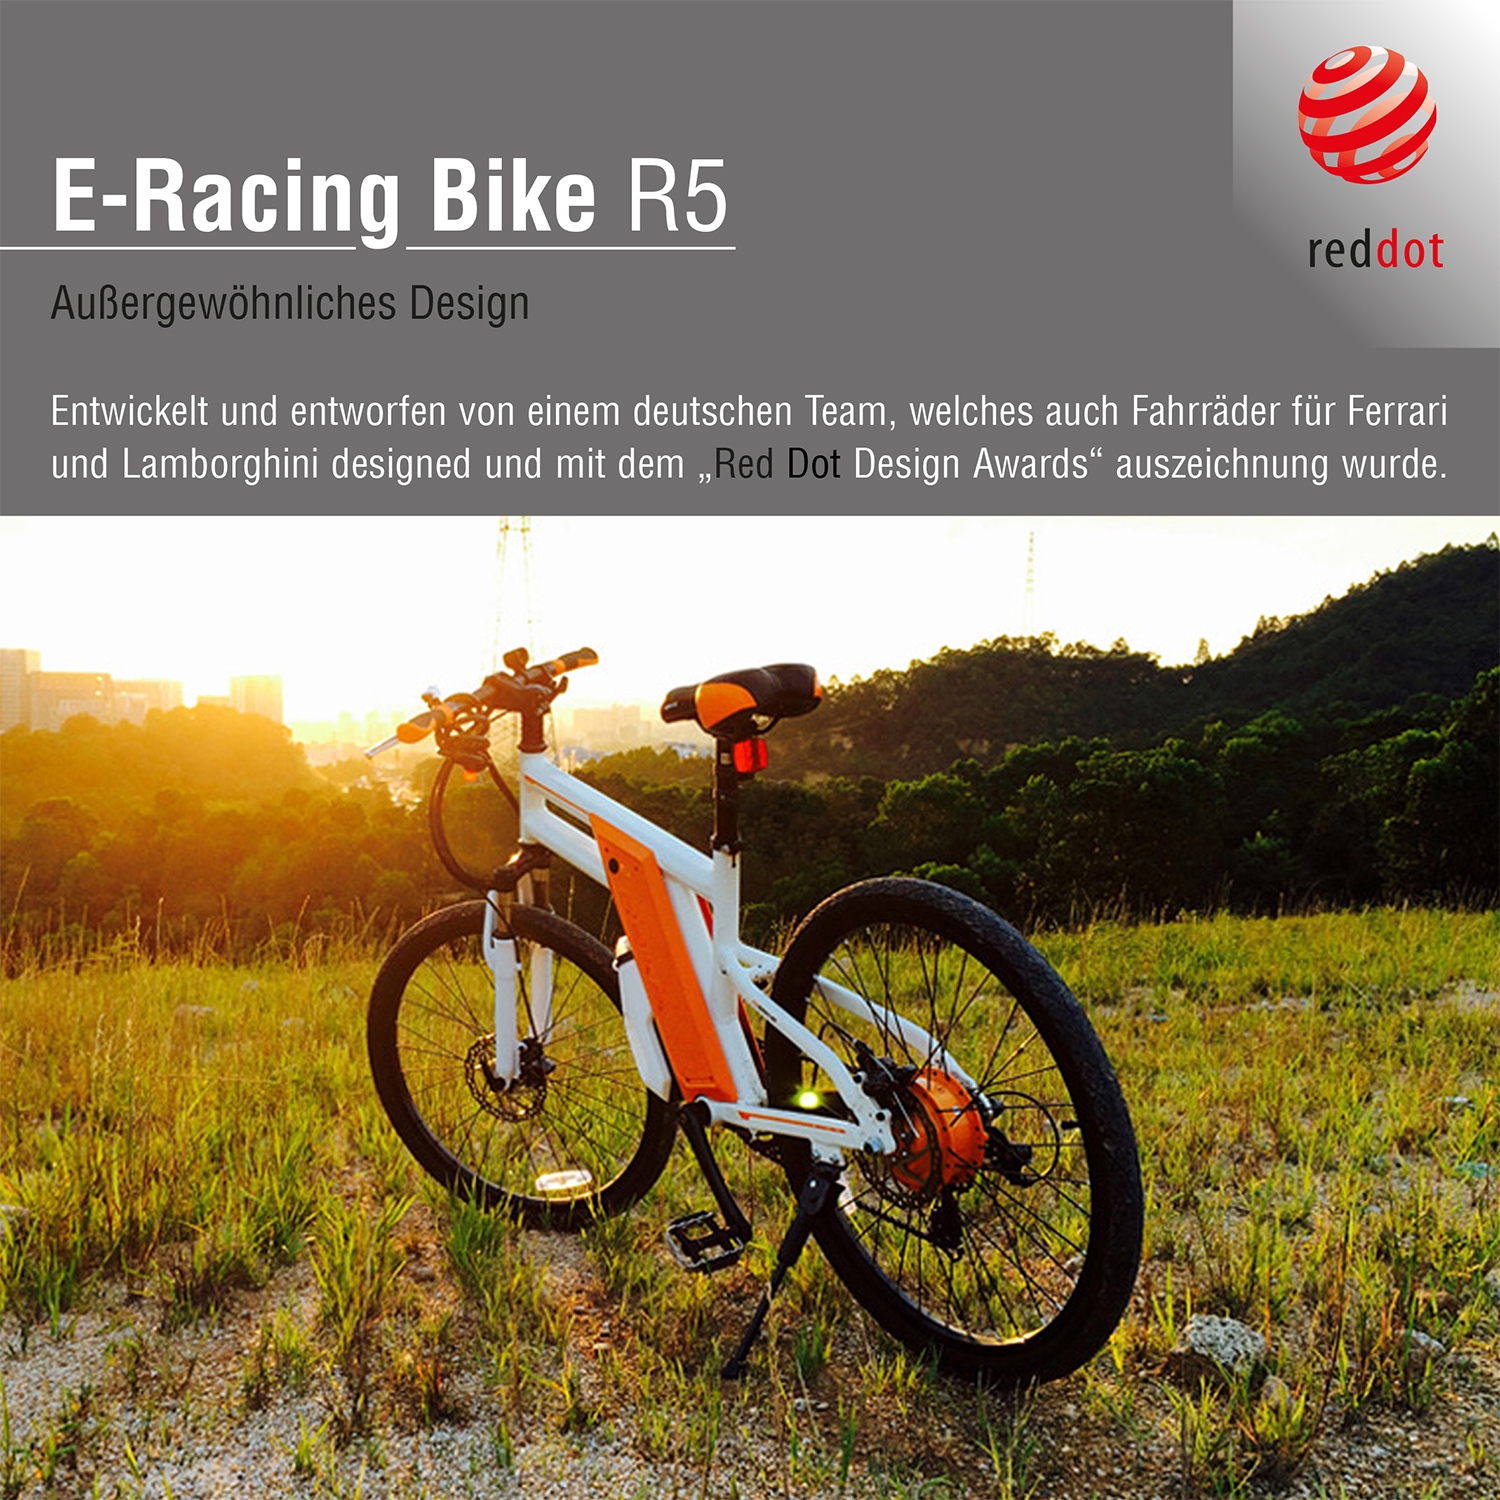 Leicke, SachsenRad E-Racing Bike R5, 240W Motor, 24-Zoll